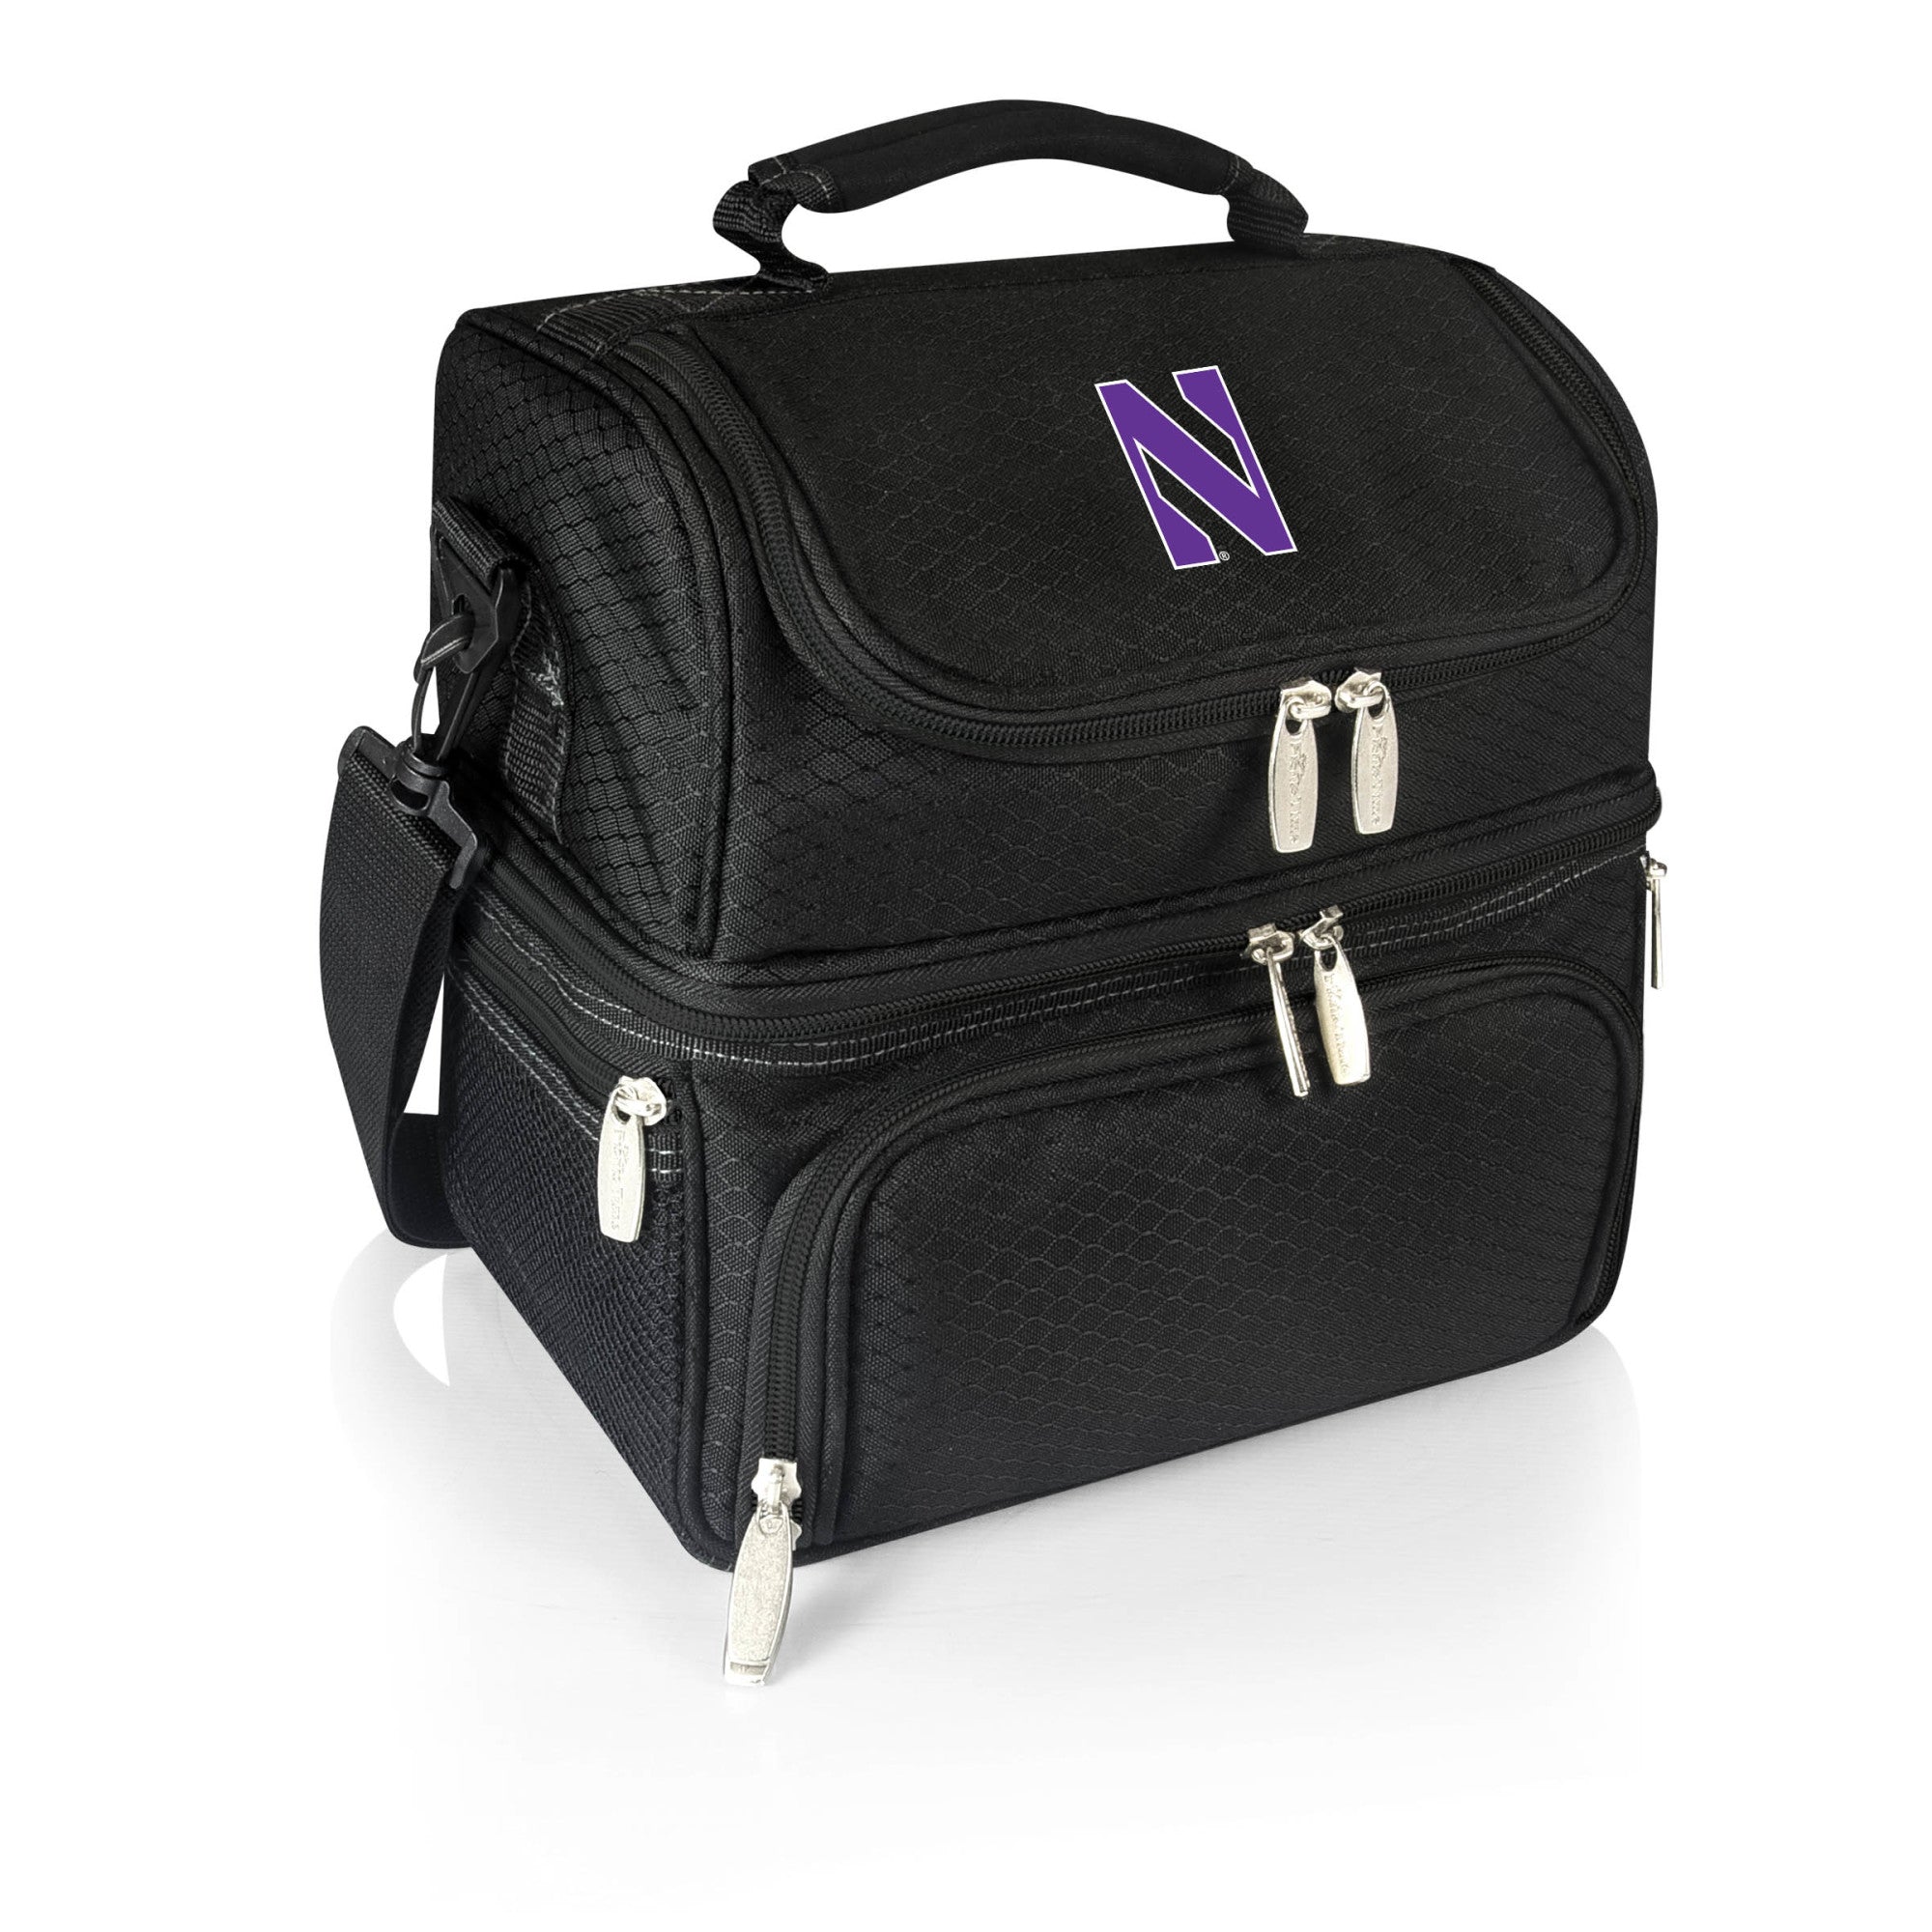 Northwestern Wildcats - Pranzo Lunch Bag Cooler with Utensils